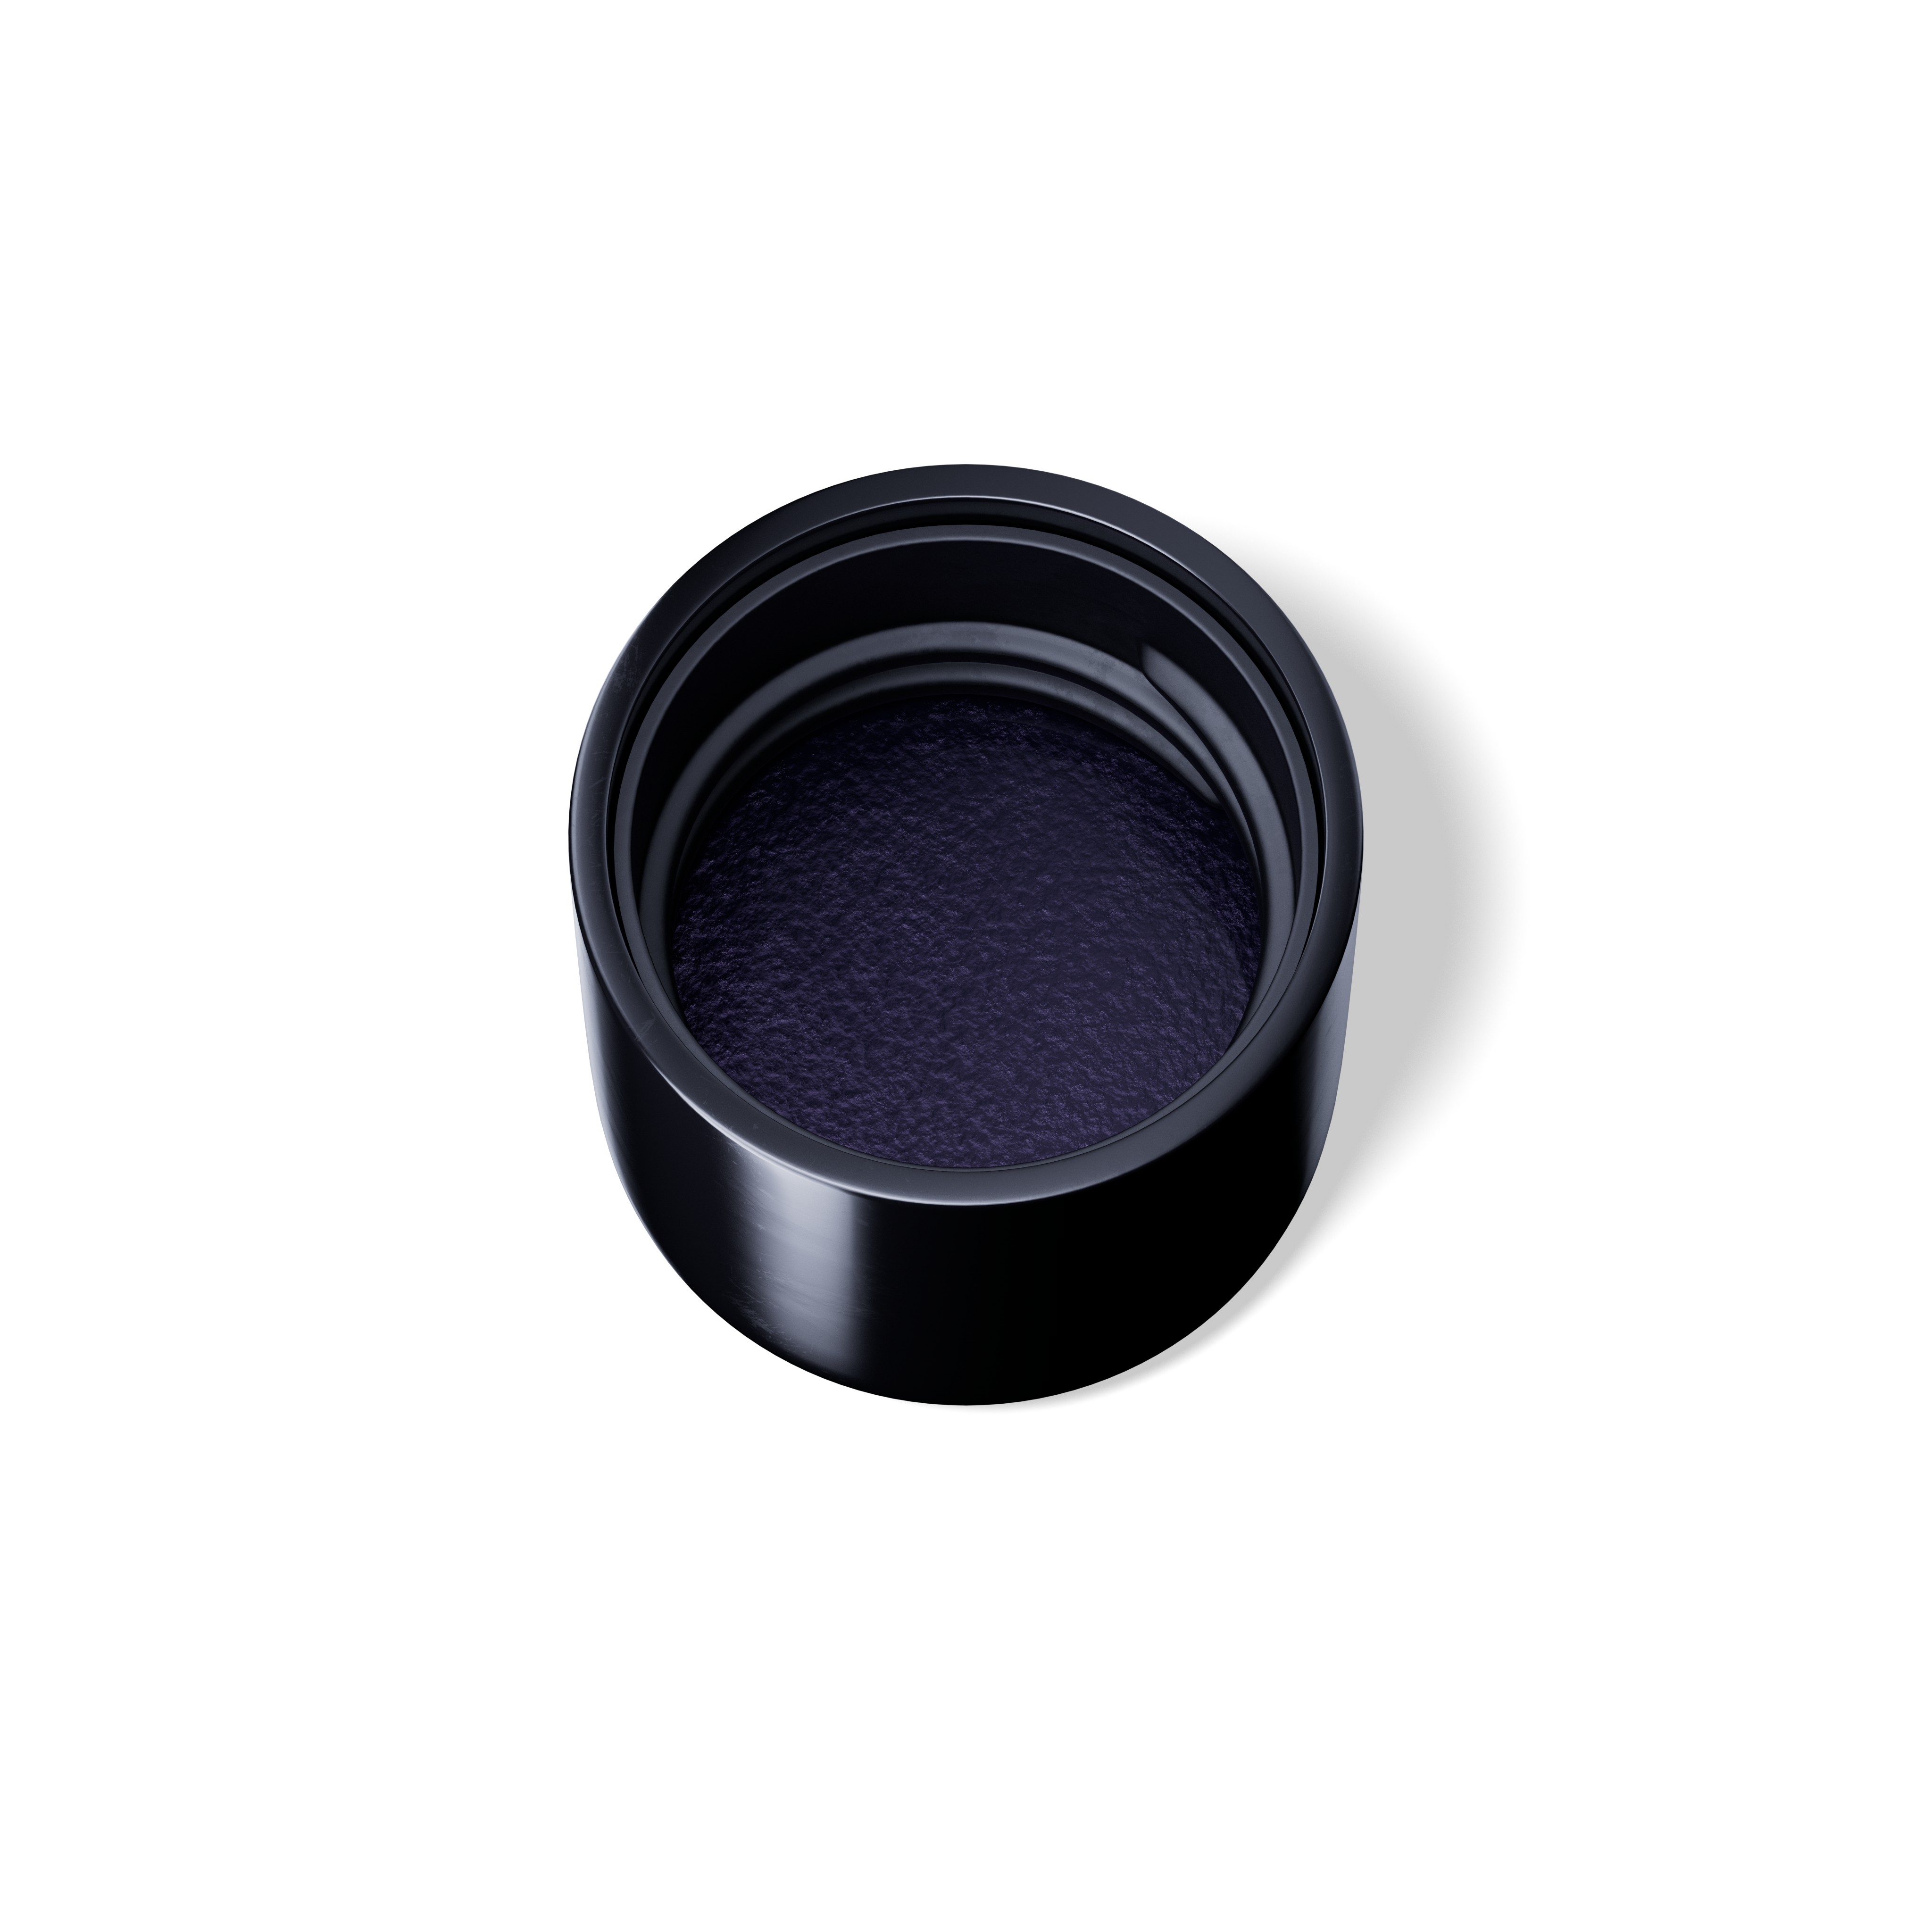 Screw cap 24/410, Urea, black, glossy finish, violet Phan inlay (Draco 120 and 200)